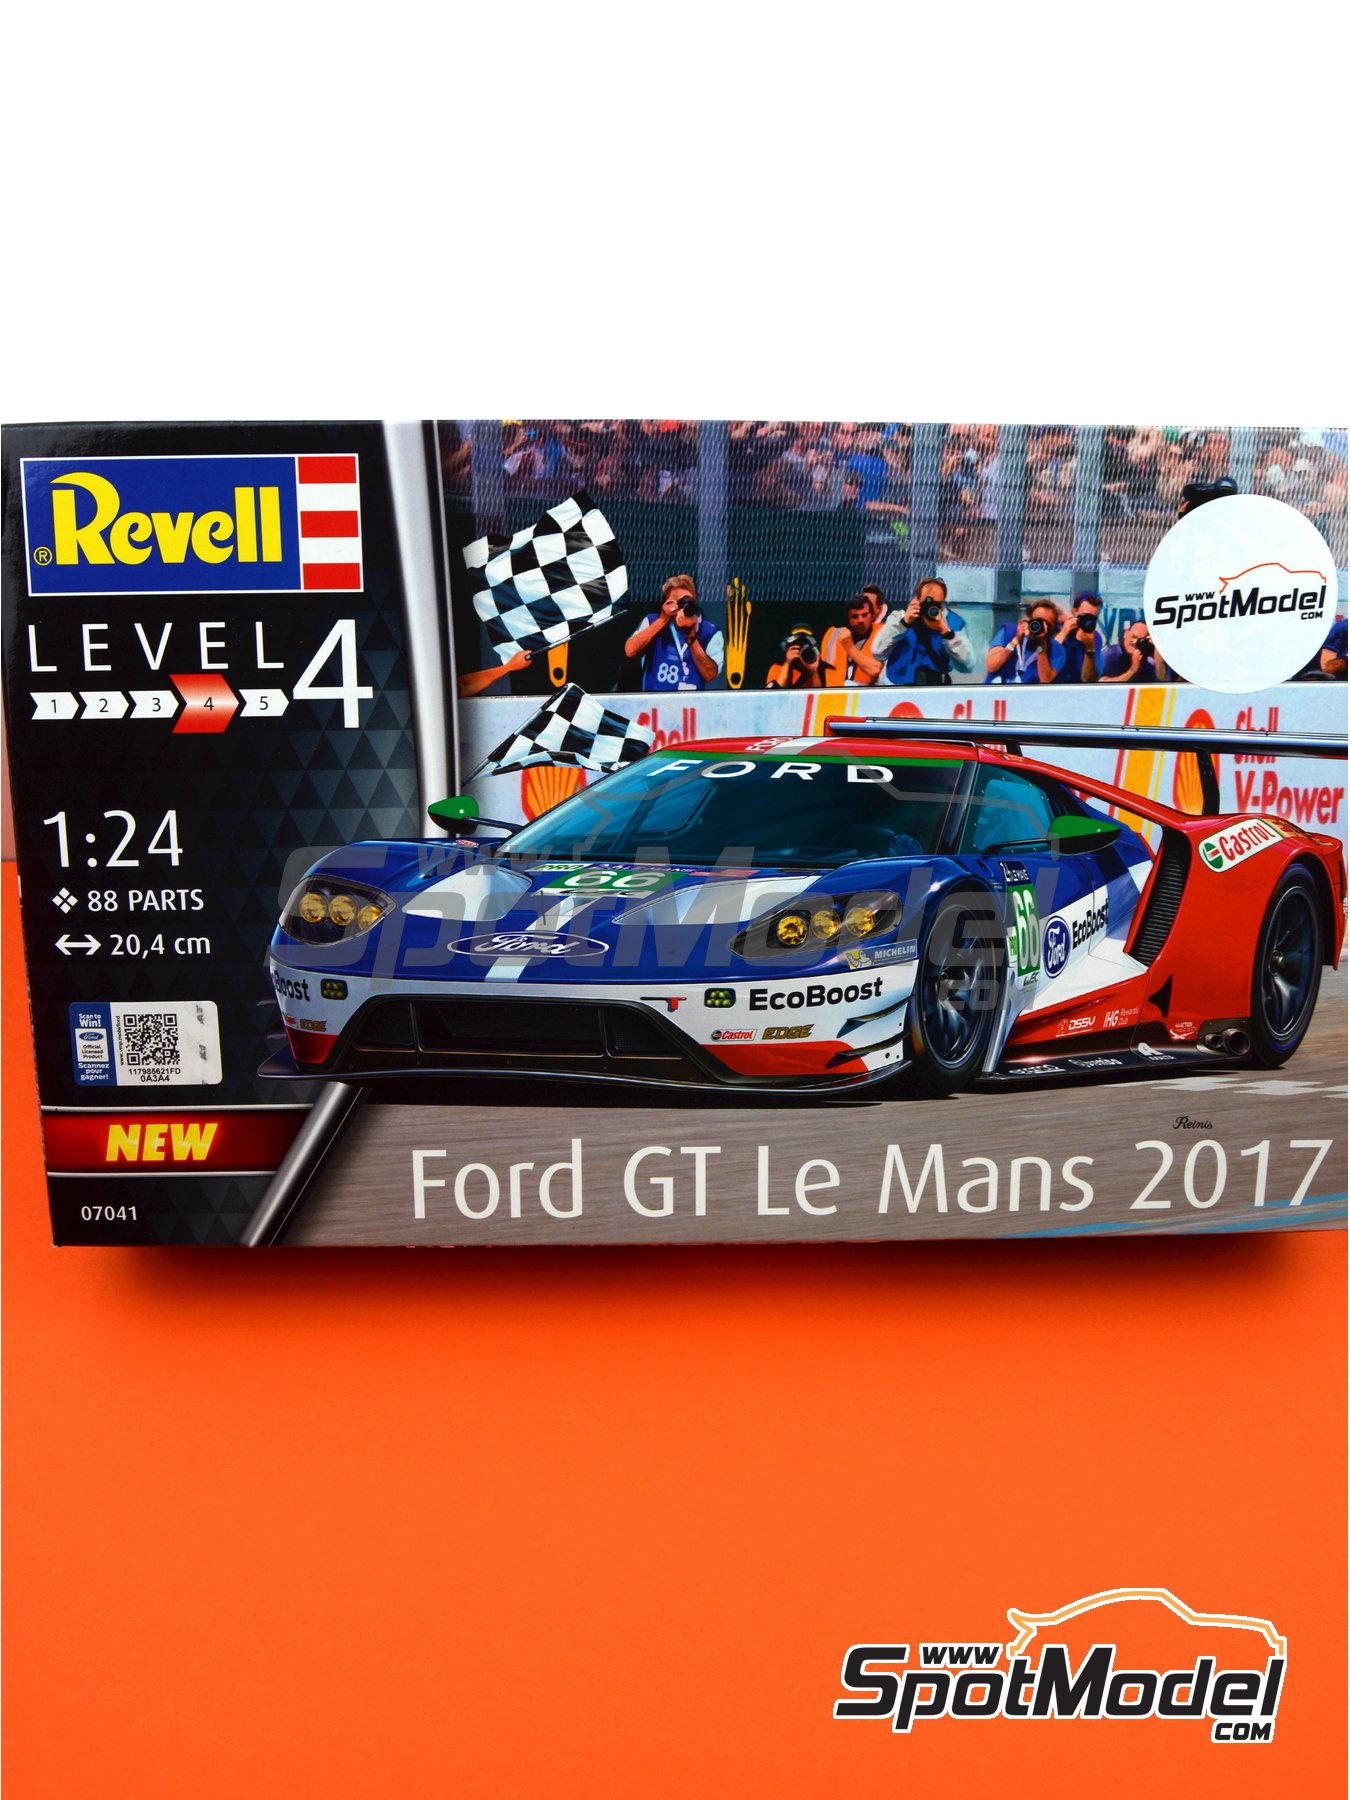 Revell Plastic Model Kit Ford GT Le Mans Scale 1 24 for sale online 